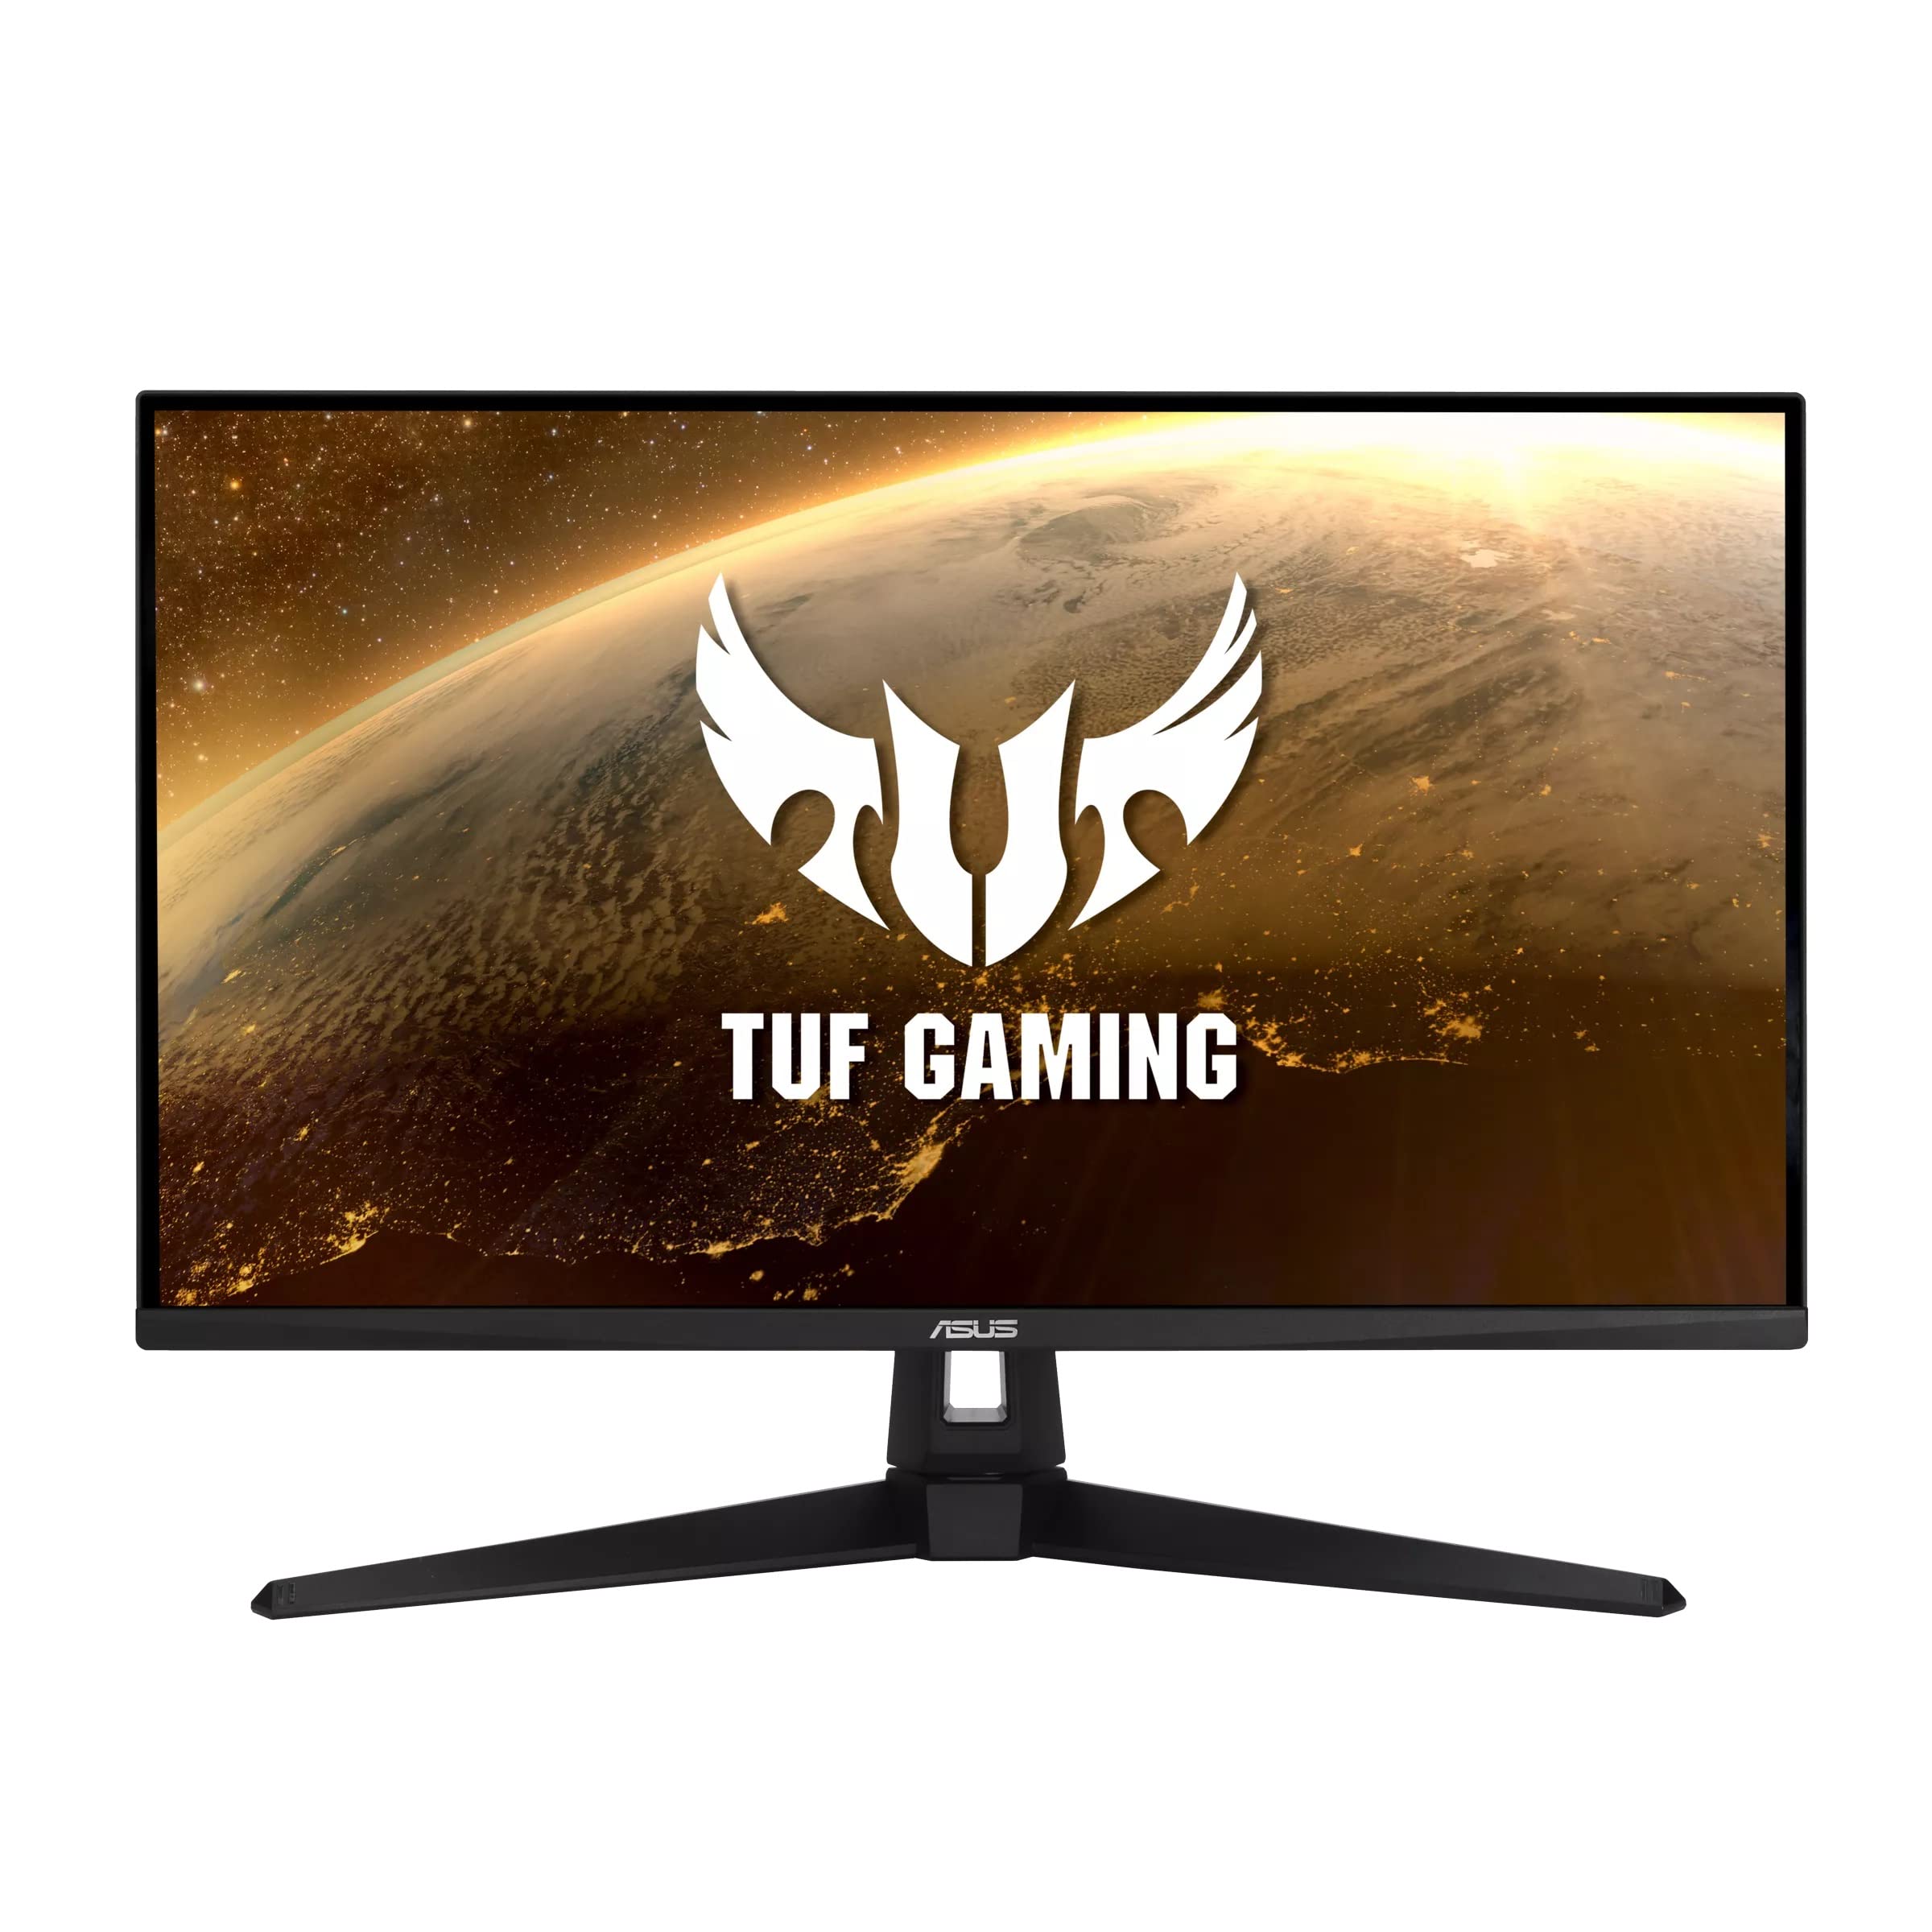 Asus شاشة الألعاب TUF Gaming VG289Q 28 HDR بدقة 4K (384...